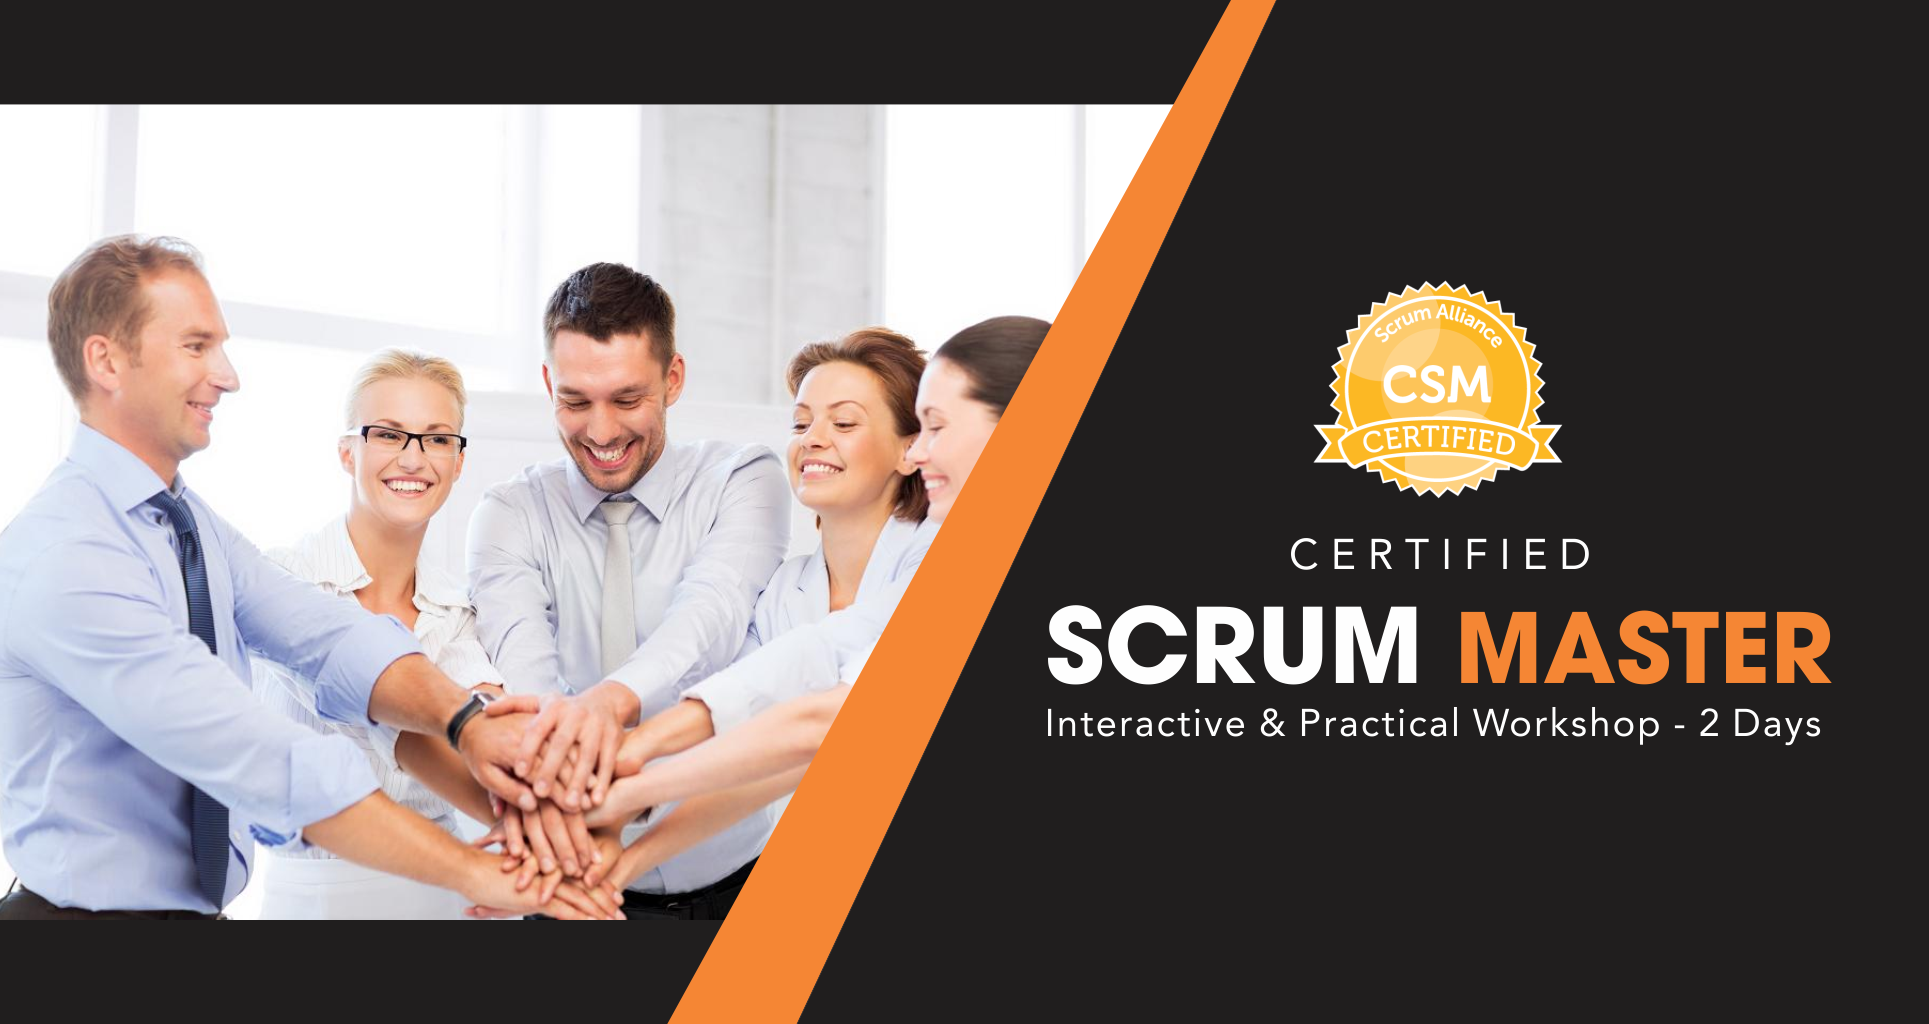 CSM (Certified Scrum Master) certification Training In Chicago, IL